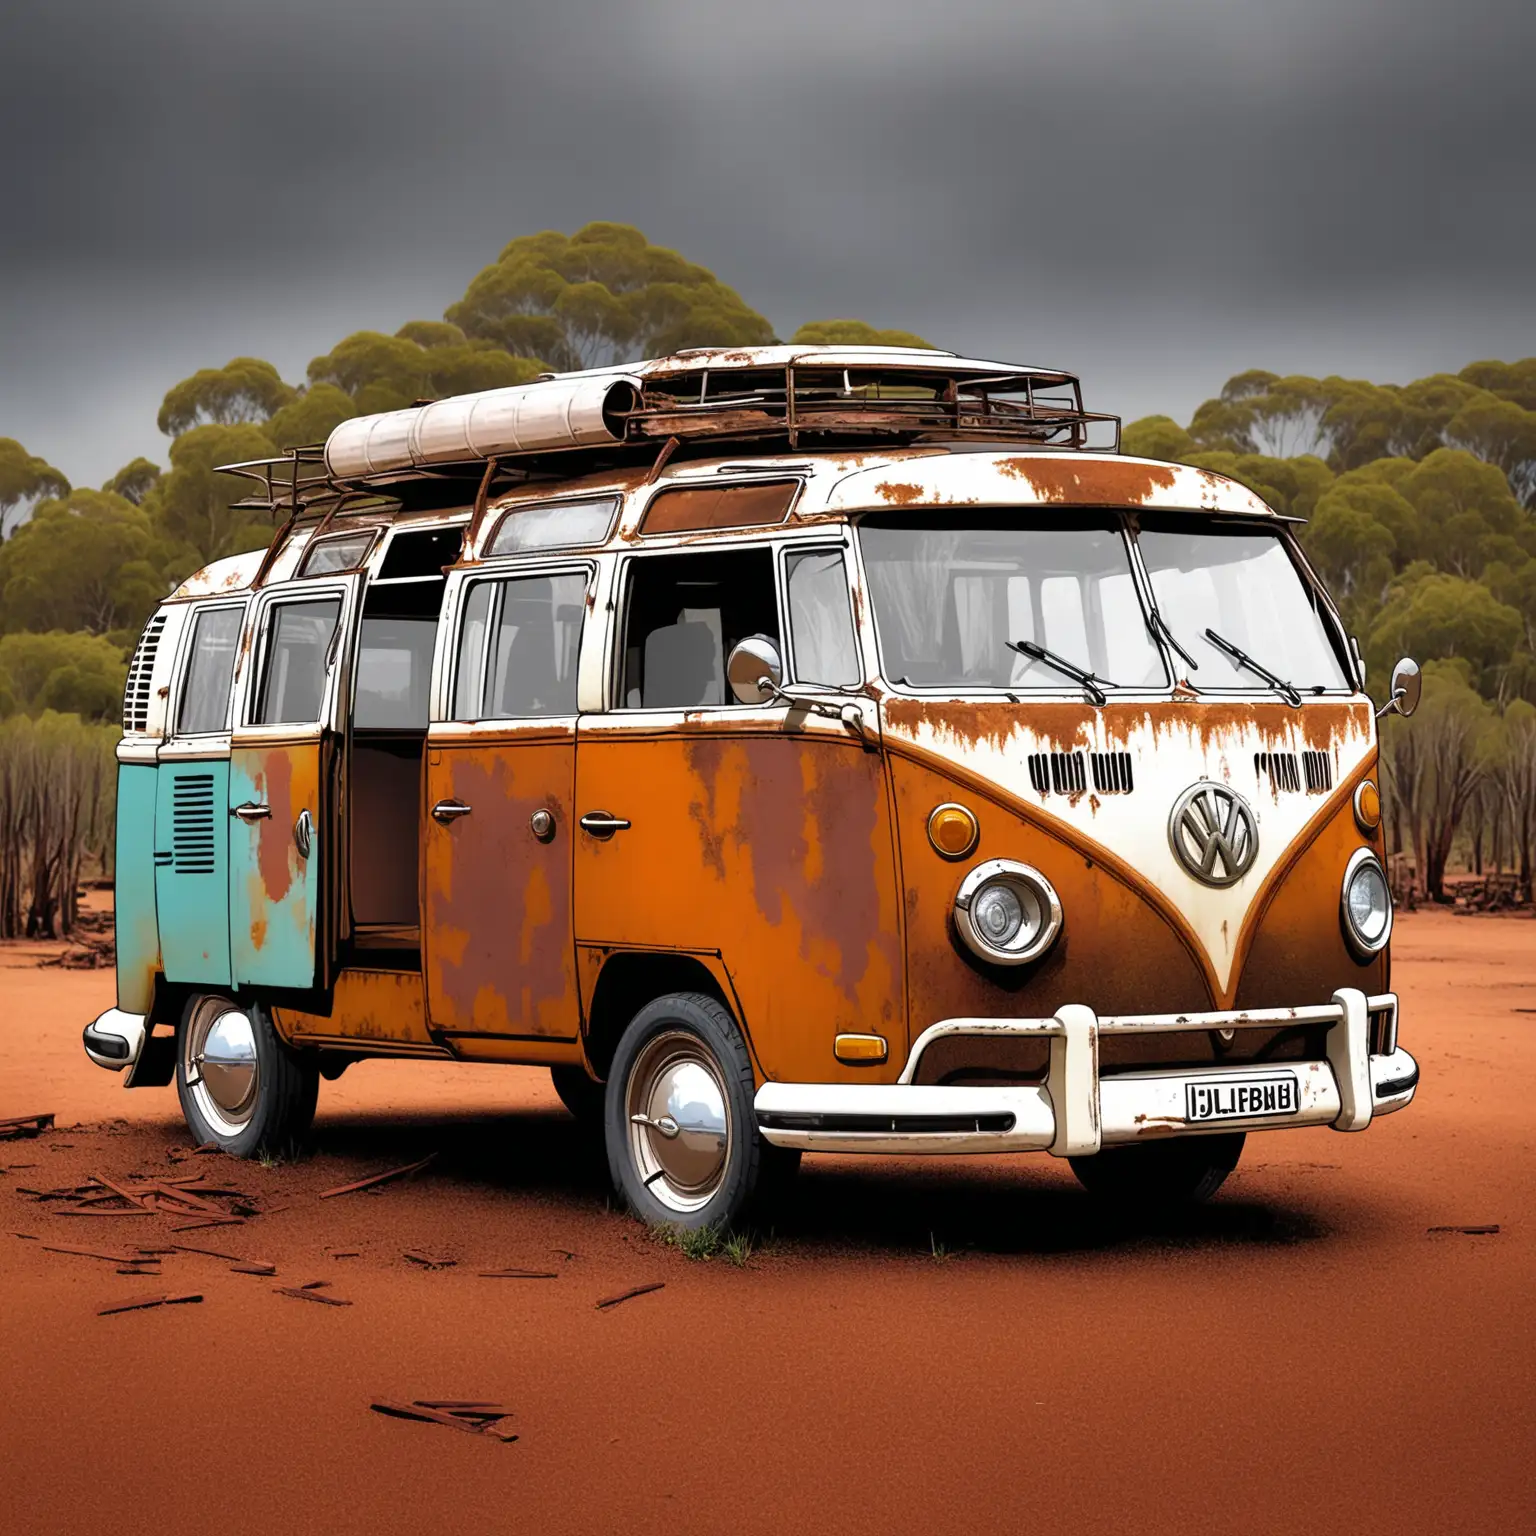 Vintage Rusty Kombi Van Abandoned in Desert Landscape